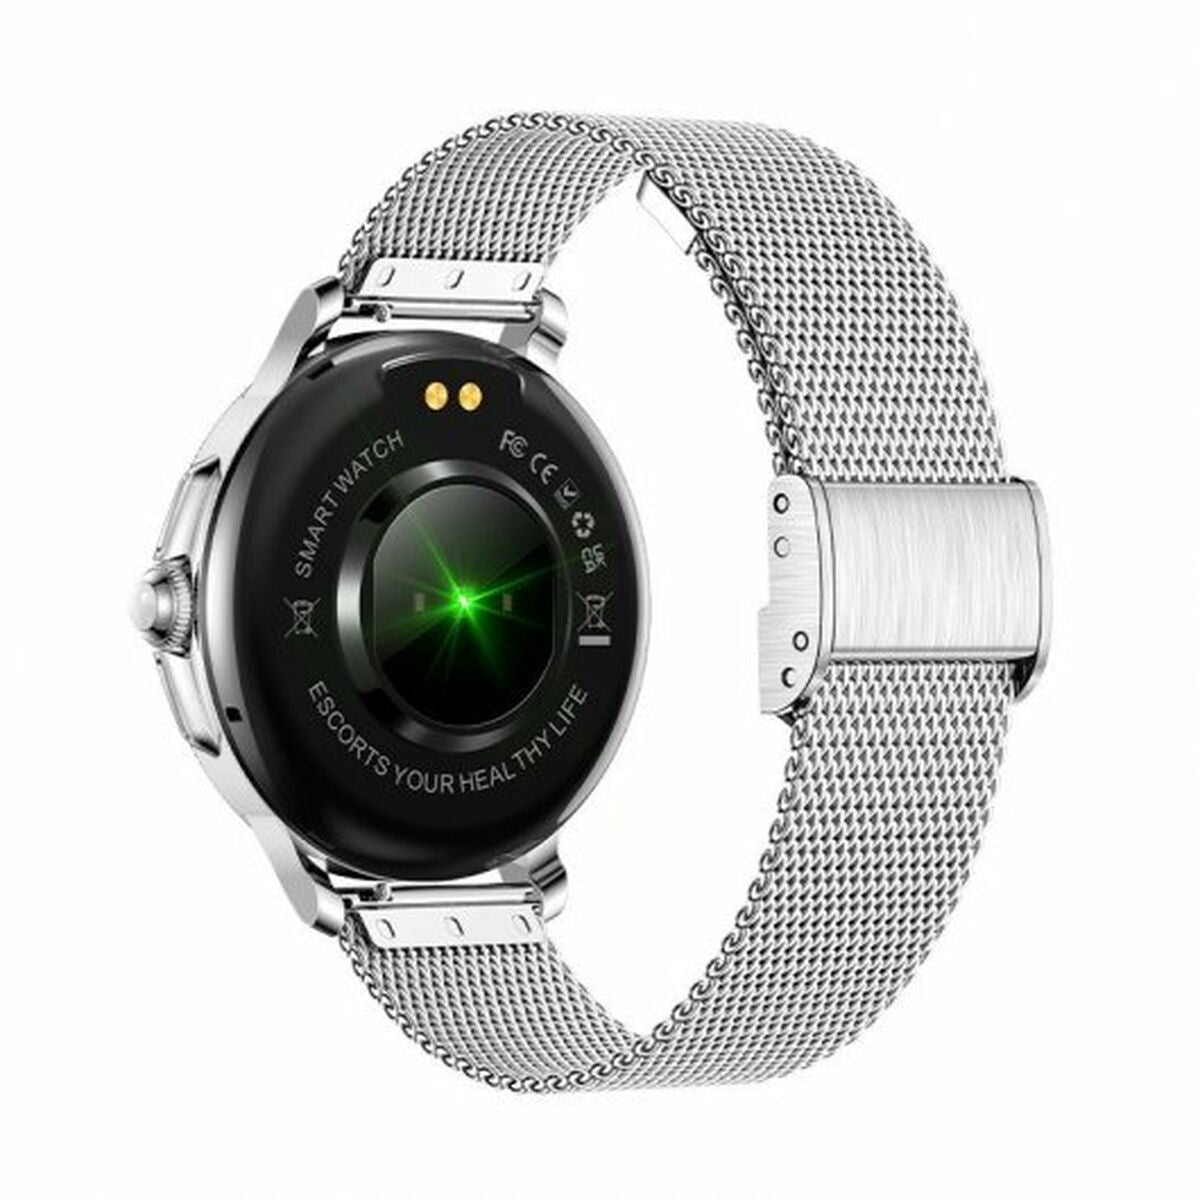 Smartwatch Cool Dover Grau - CA International 